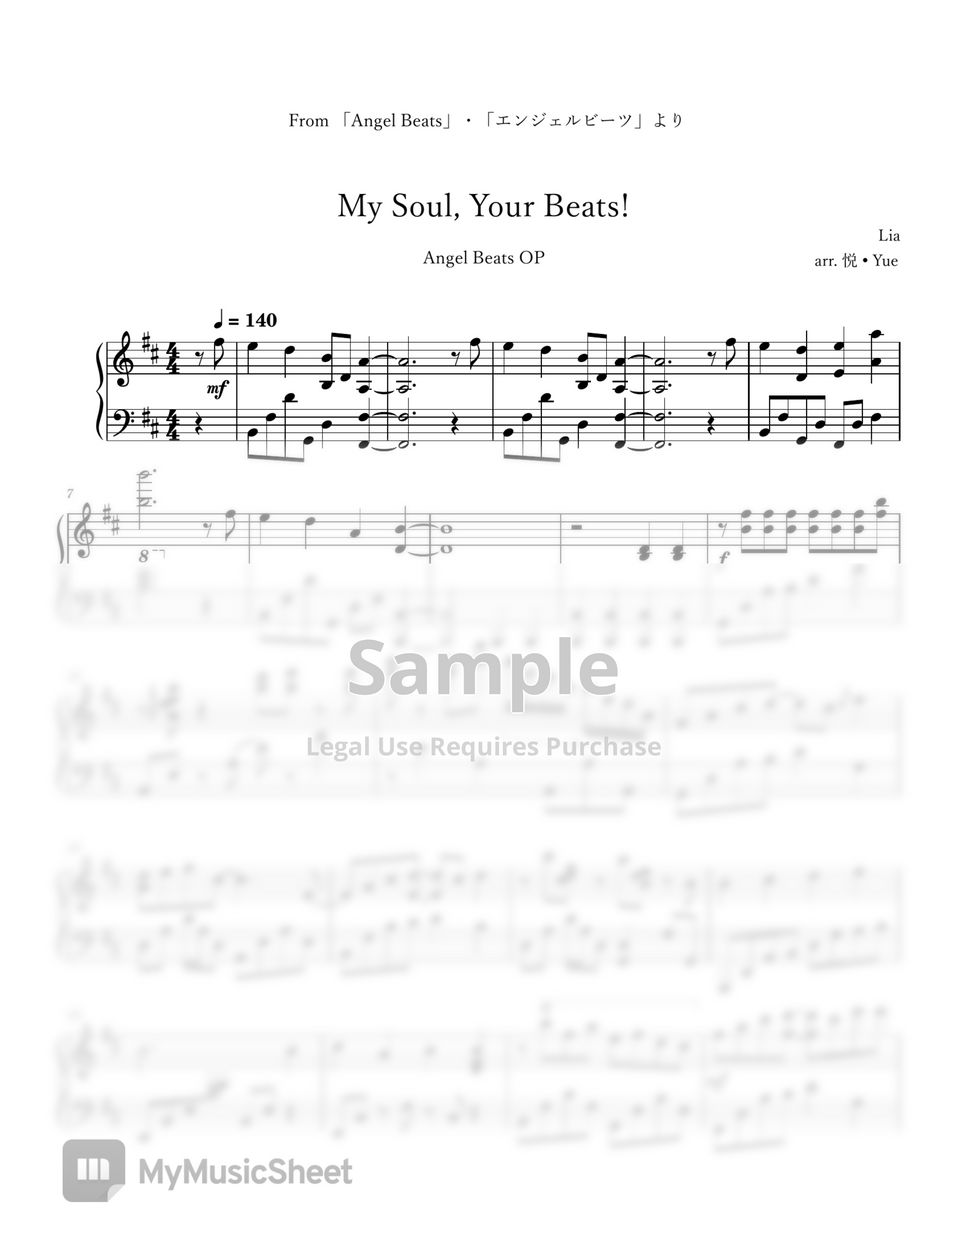 Lia - Angel Beats OP - My Soul, Your Beats! Piano (arrangement) by 悦 • Yue